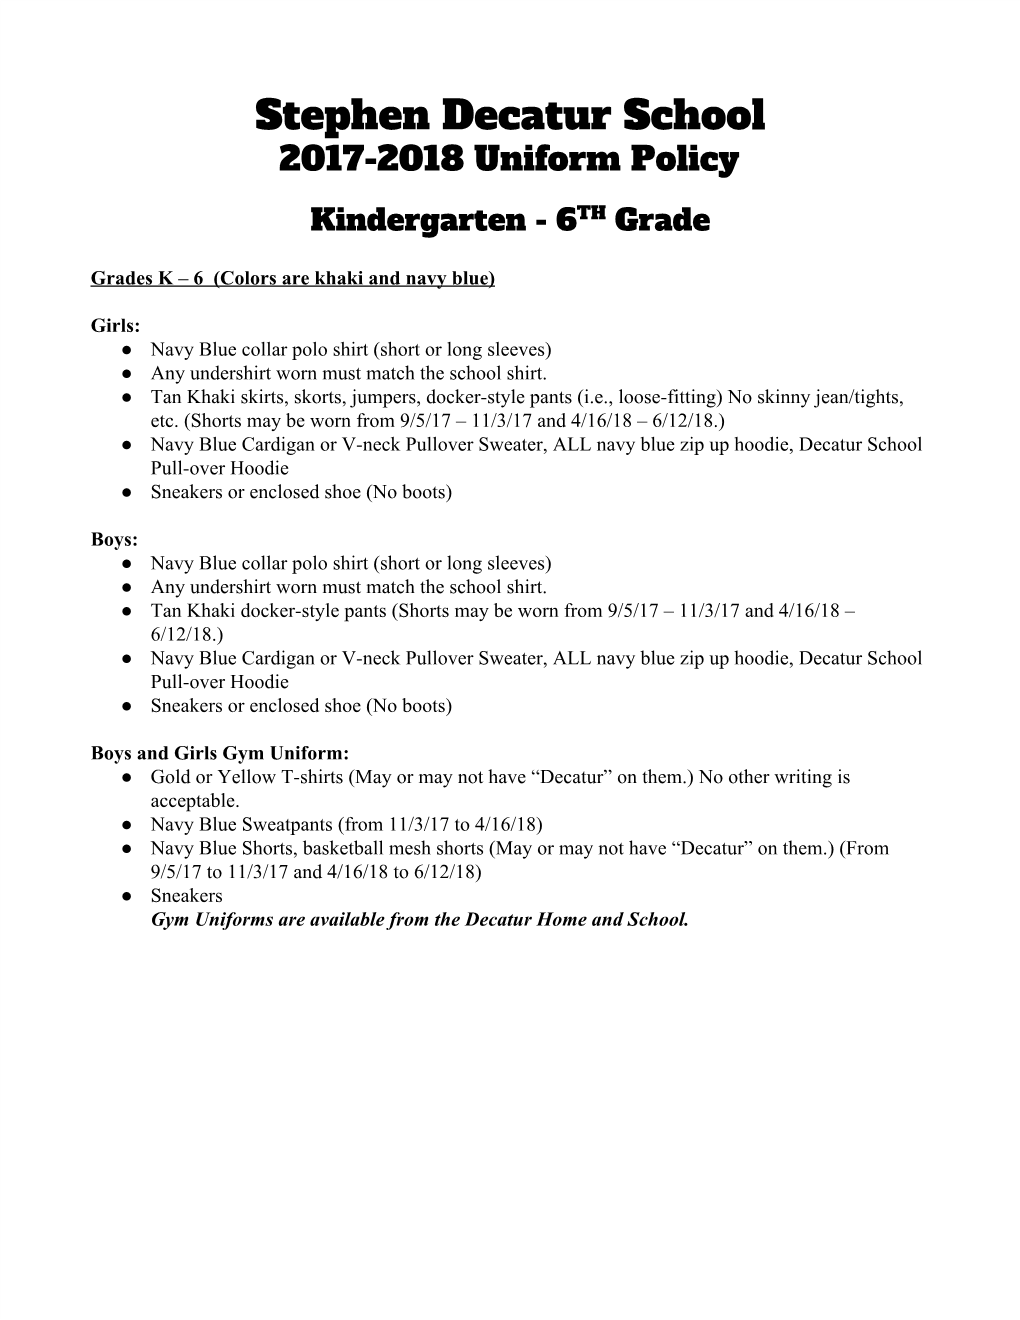 Stephen Decatur School 2017-2018 Uniform Policy